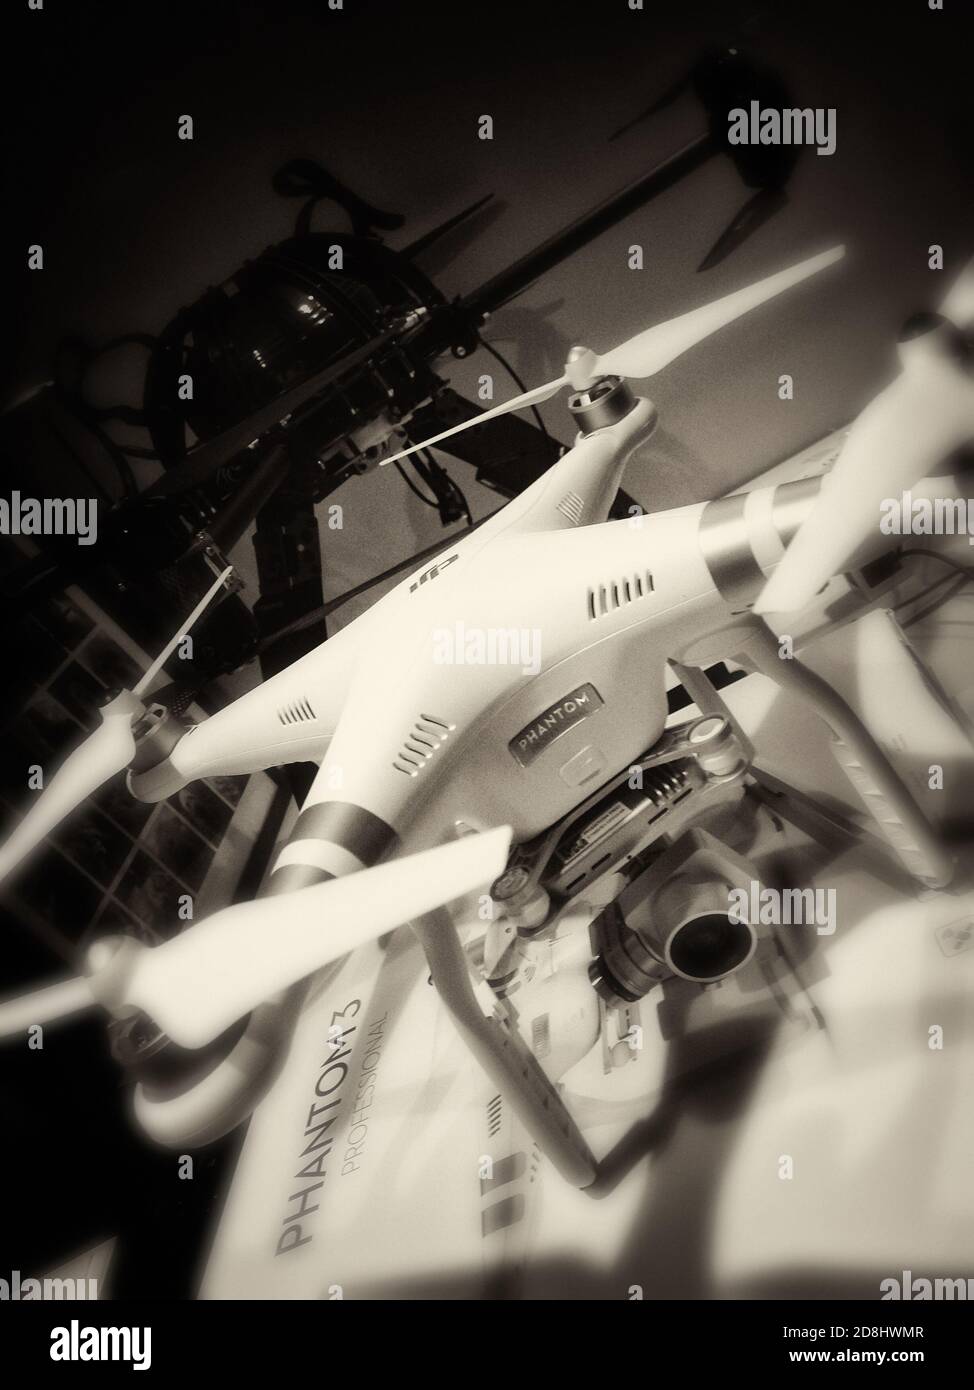 Blacka e foto bianca di un DJI Phantom 3 Pro drone Foto Stock